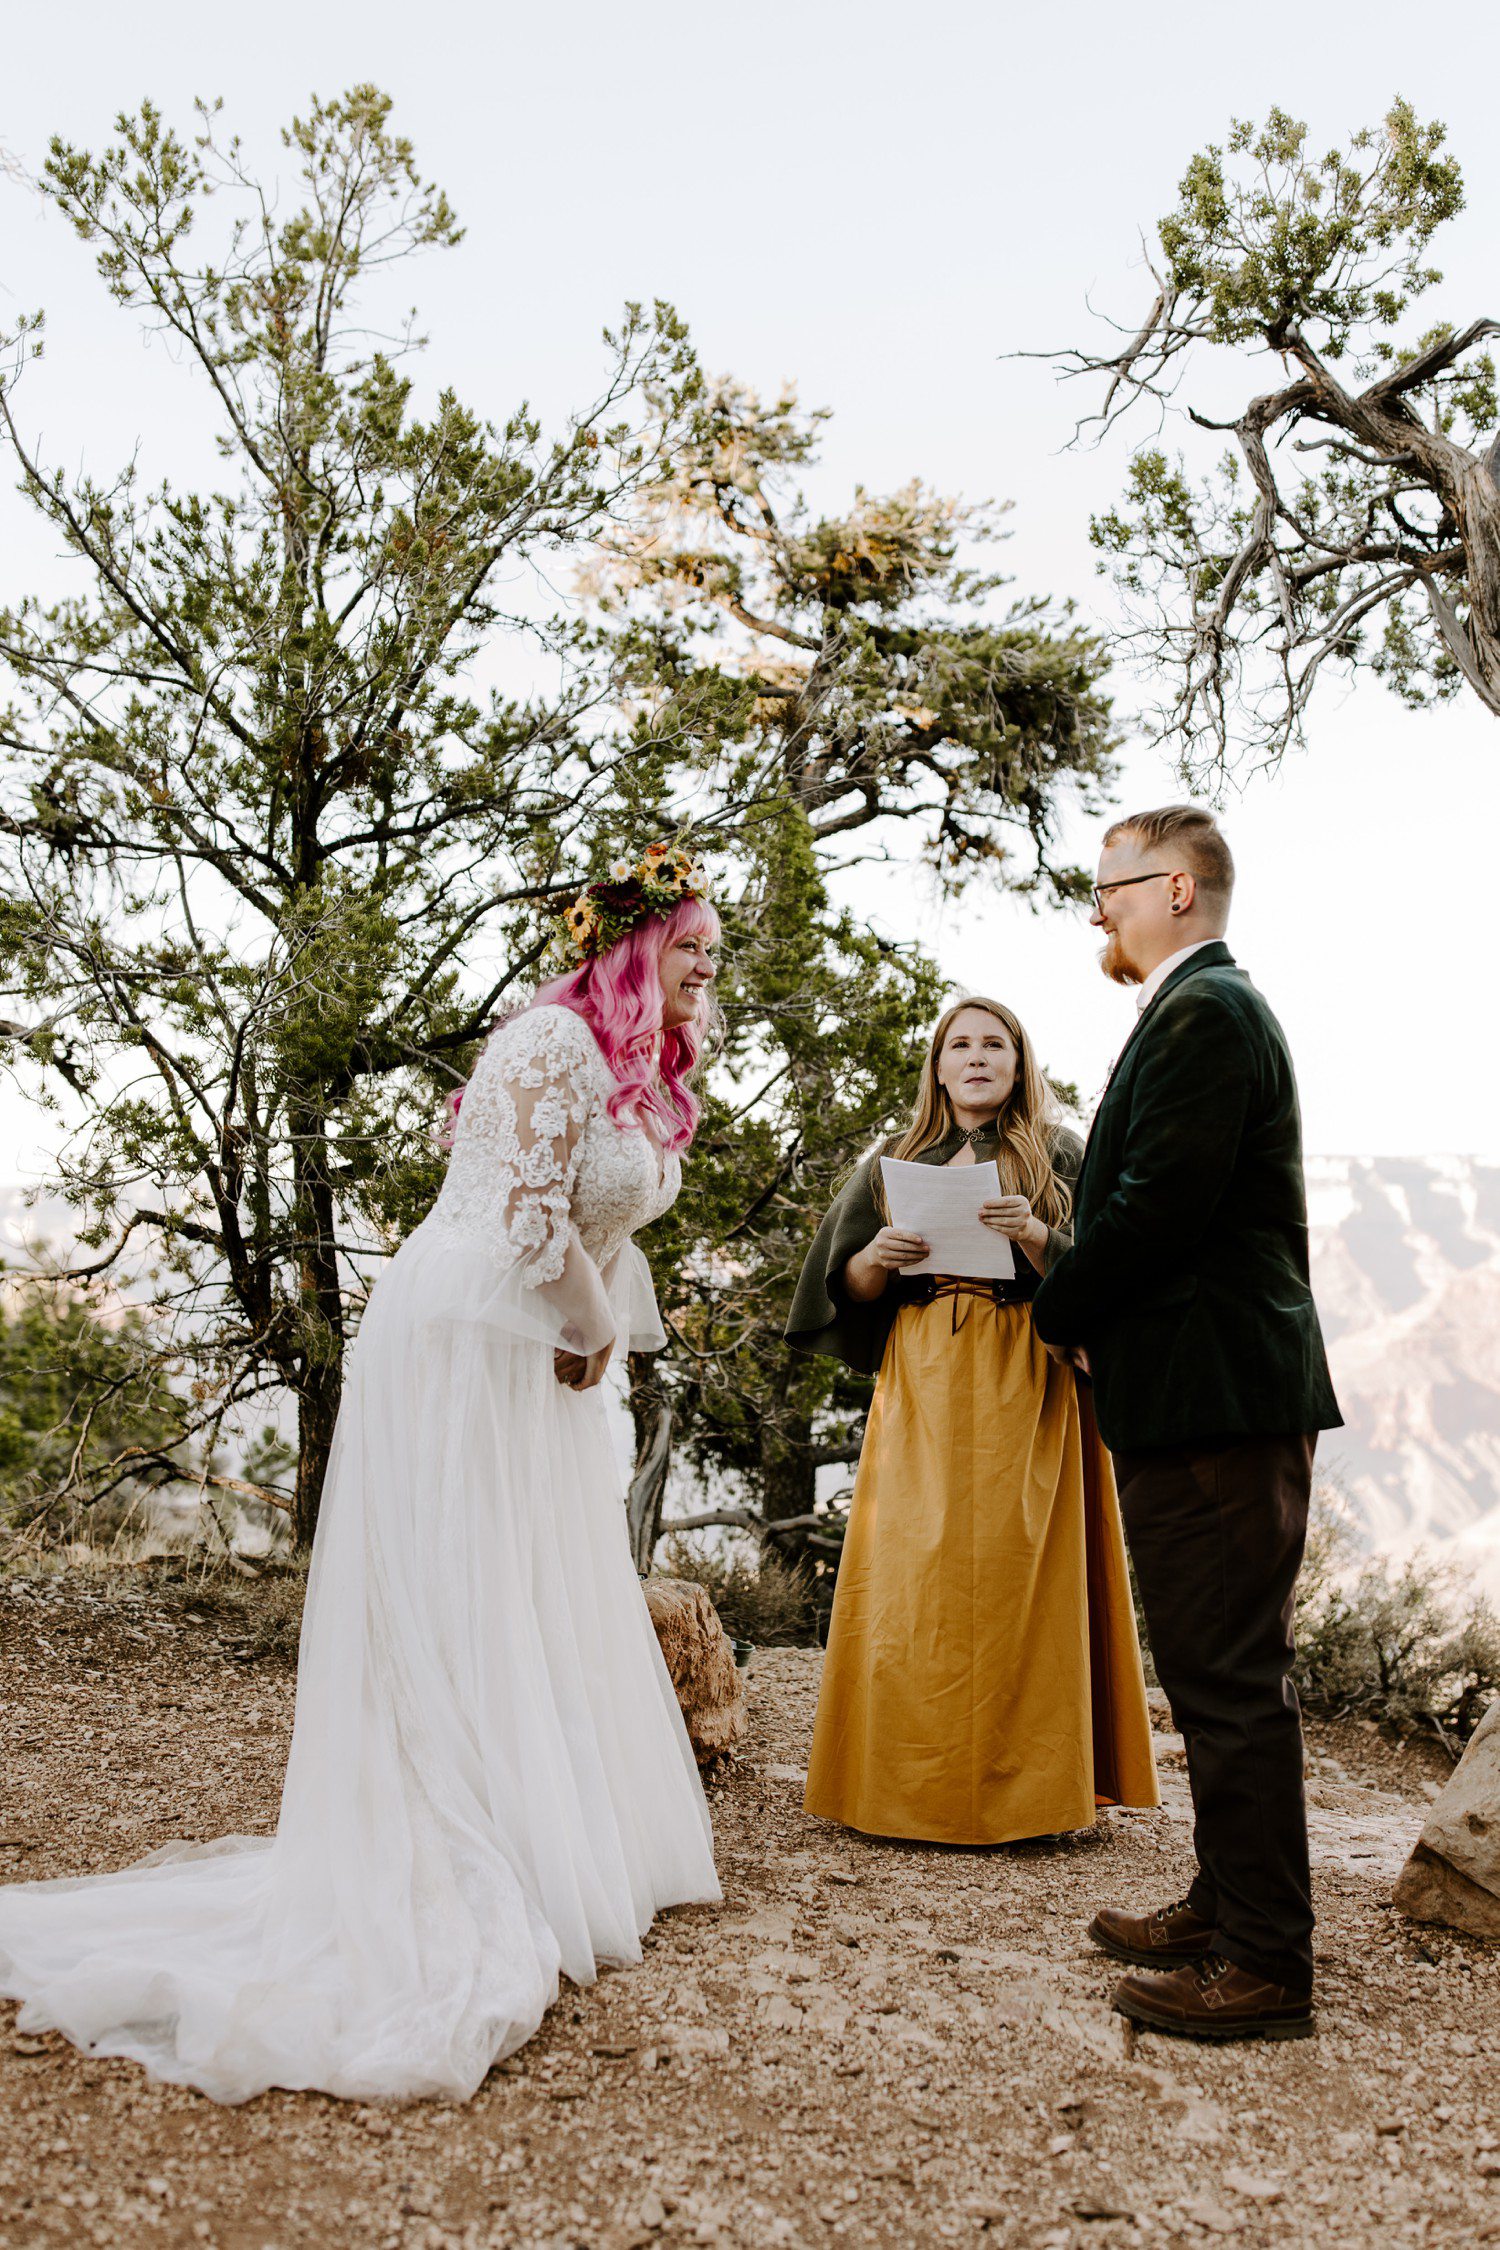 Grand Canyon wedding ceremony